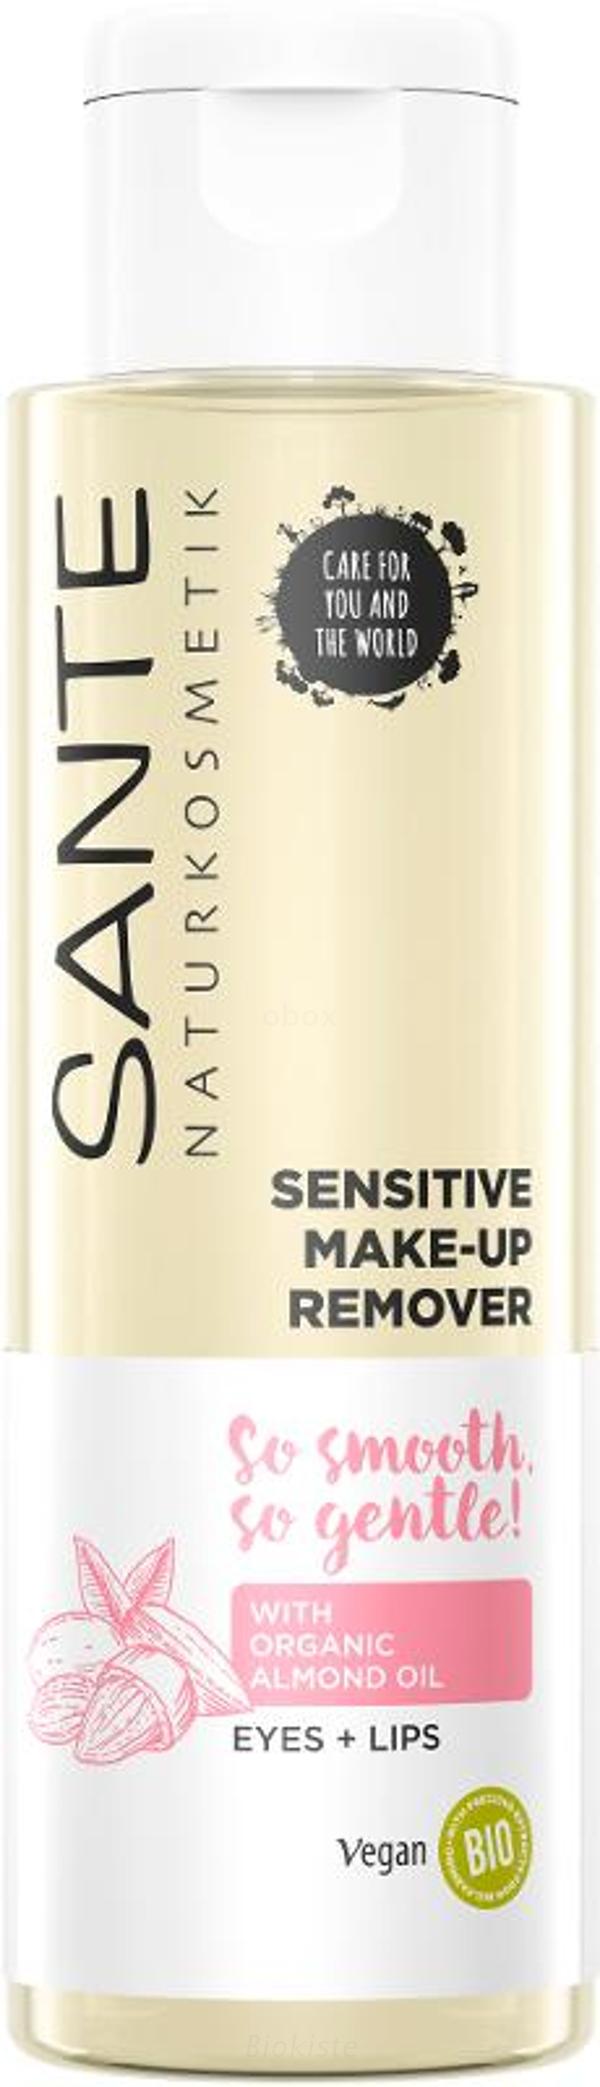 Produktfoto zu Sensitive Make-up Remover